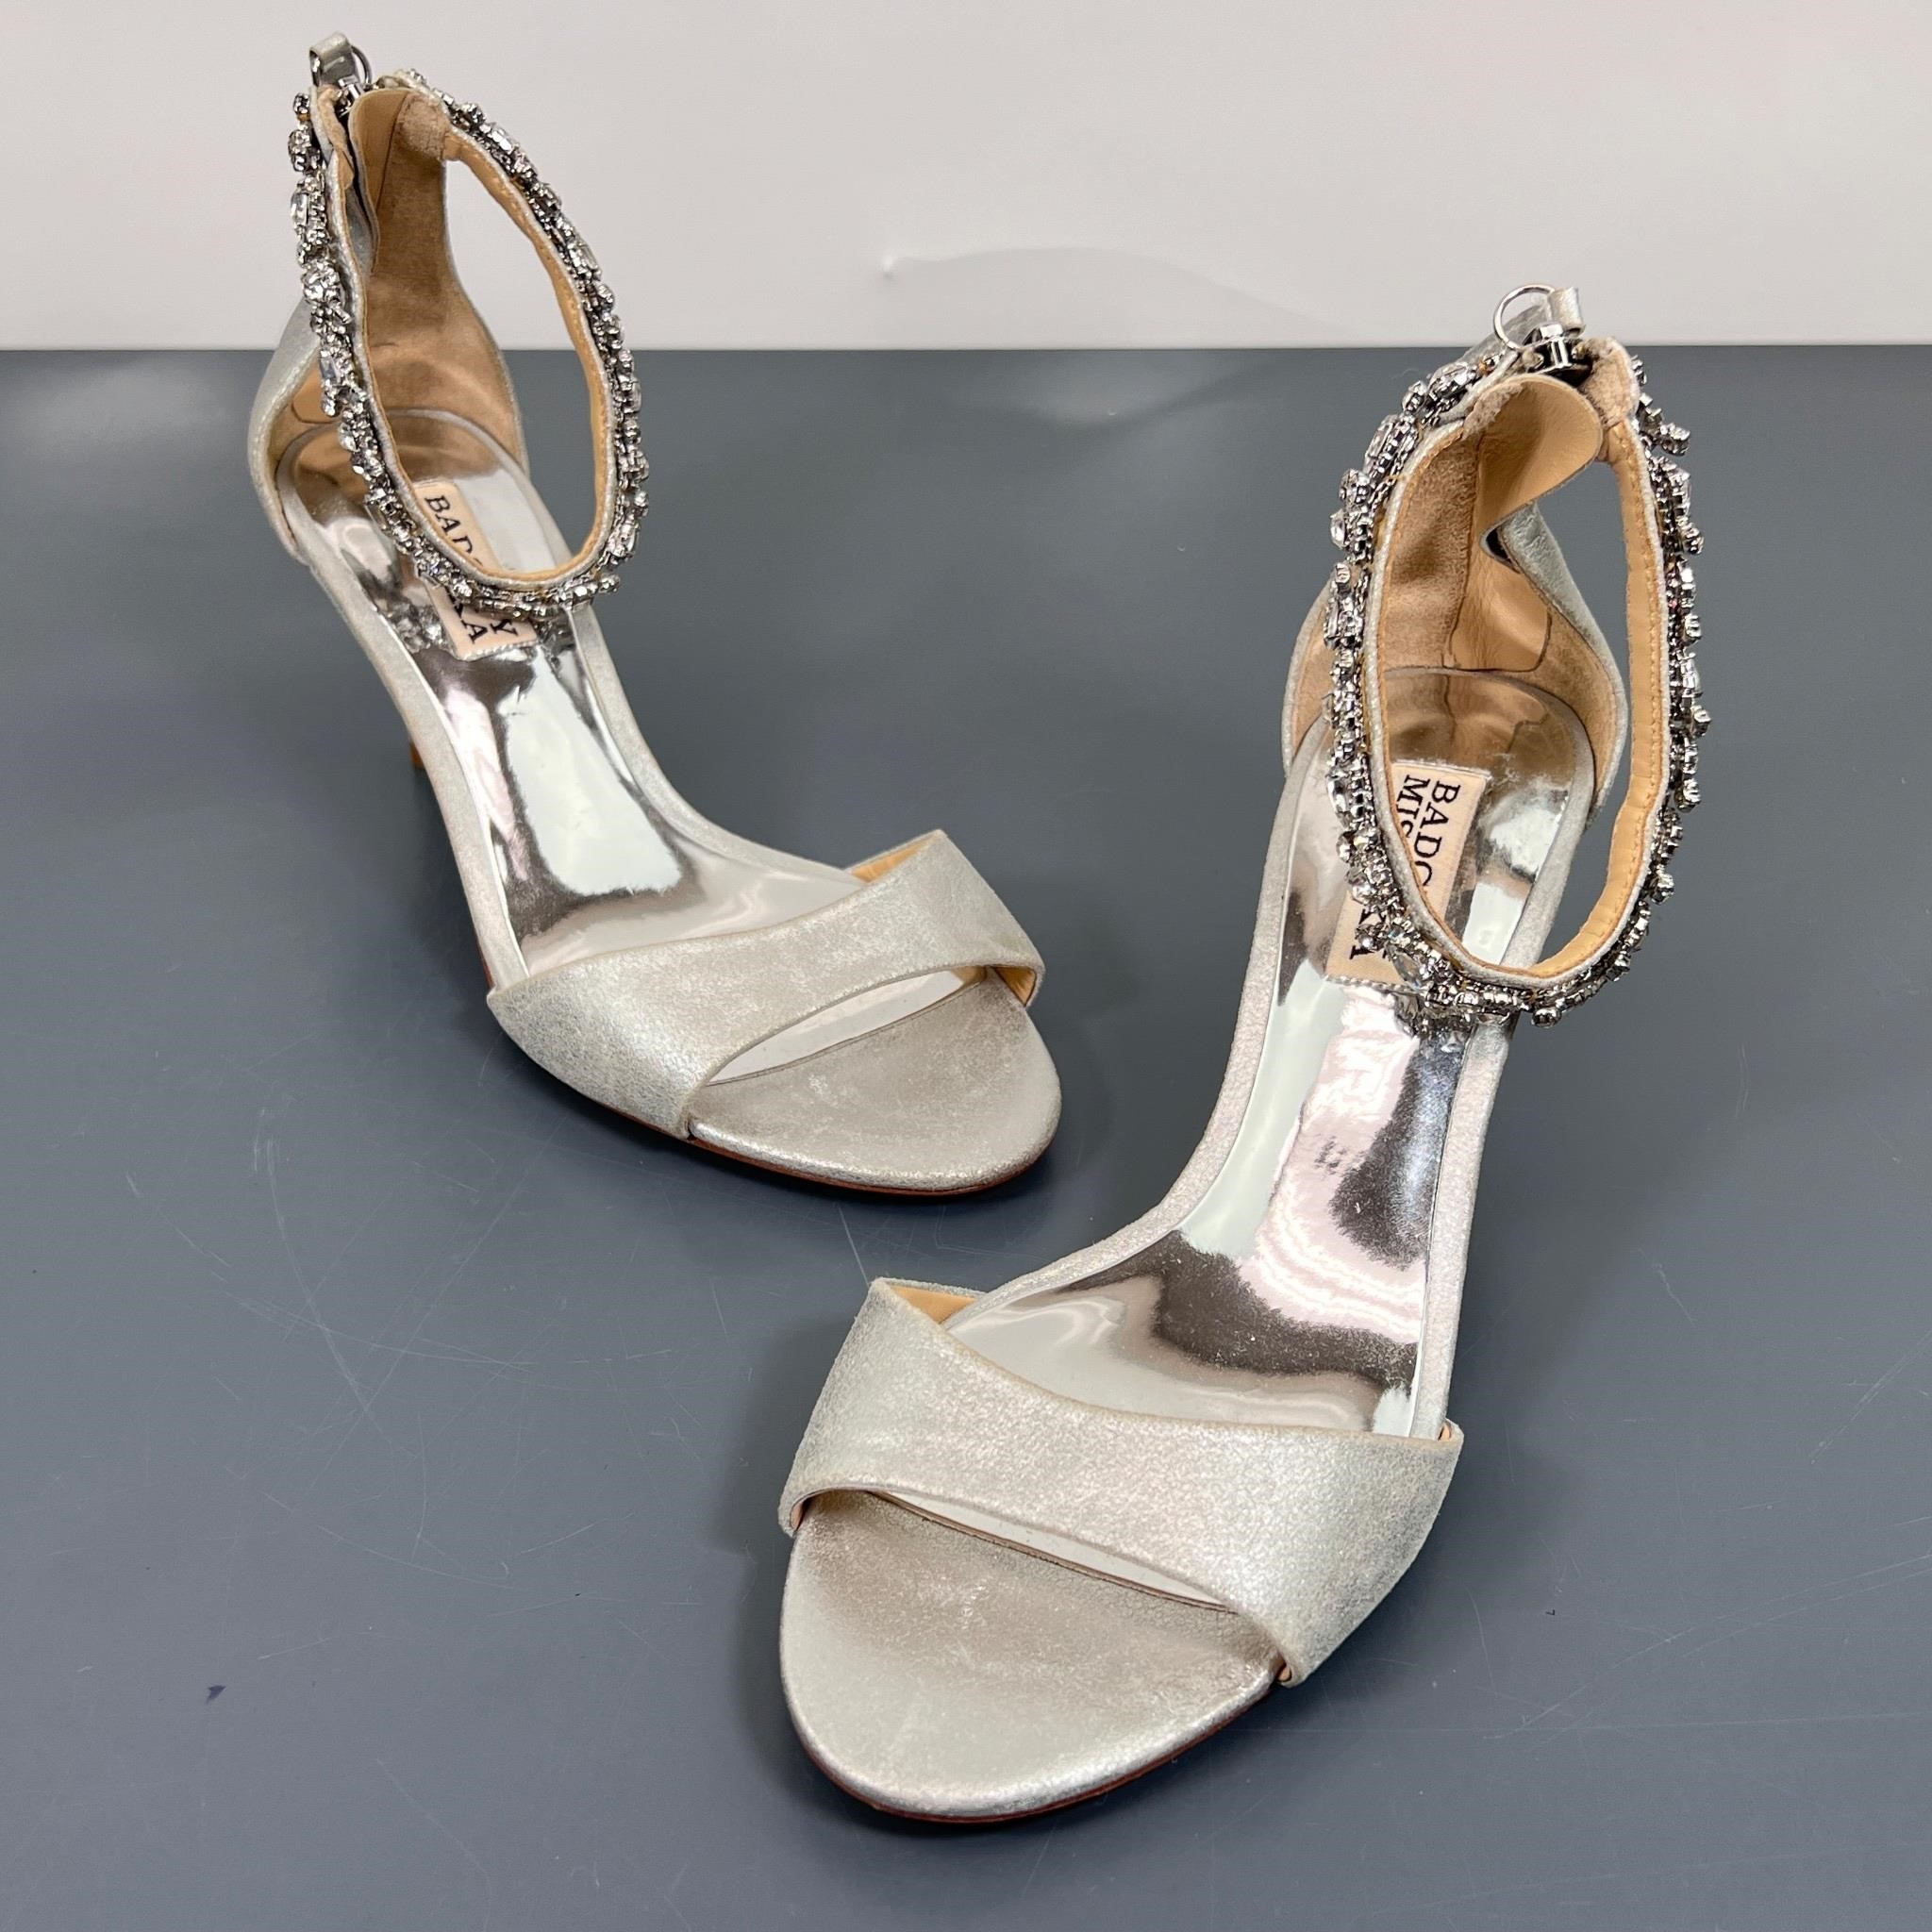 Badgley Mishka Rhinestone Heel Shoes - Size 9